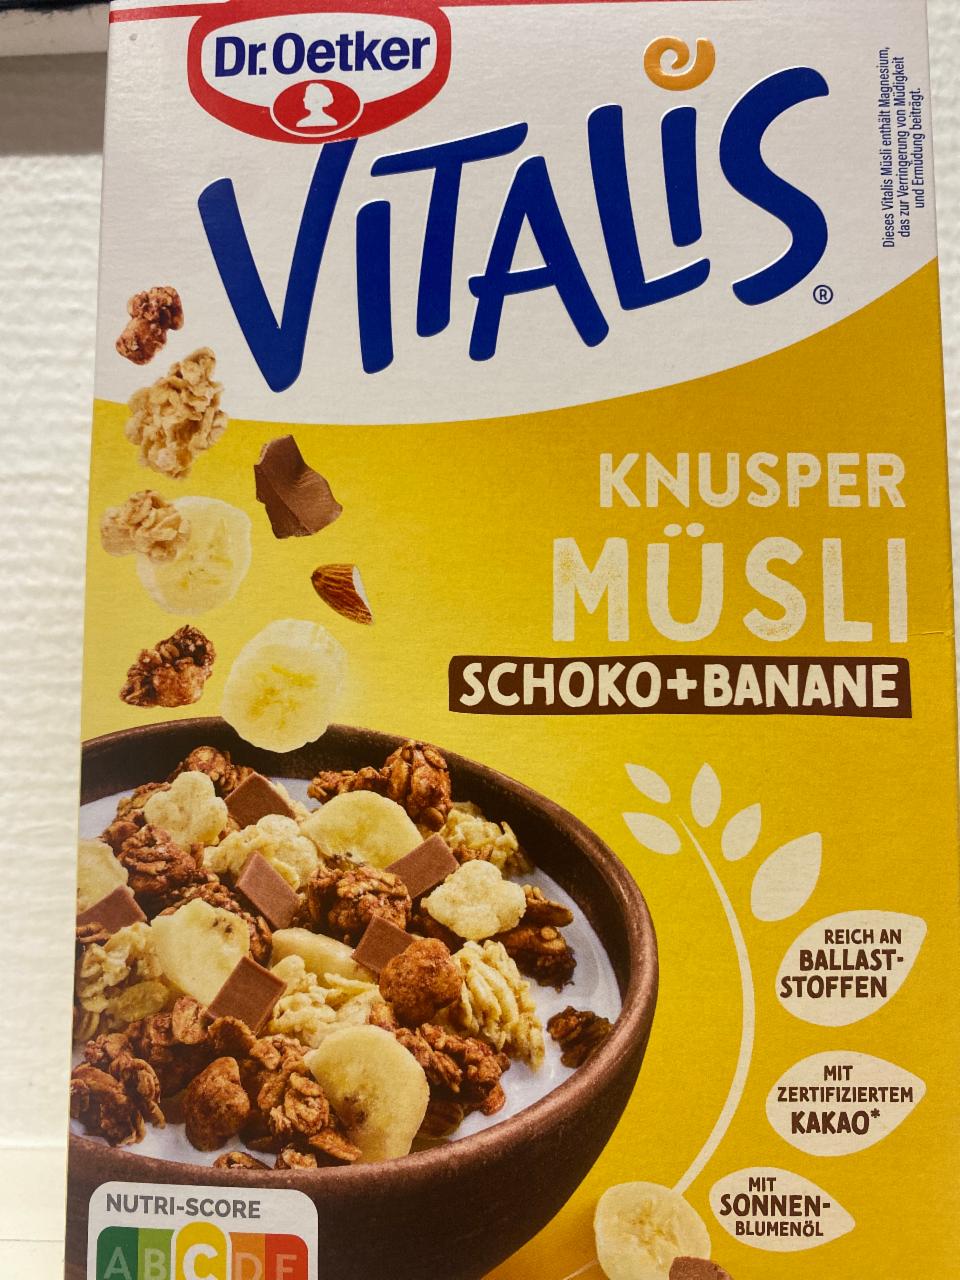 Фото - Vitalis Knusper müsli schoko+banane Dr.Oetker